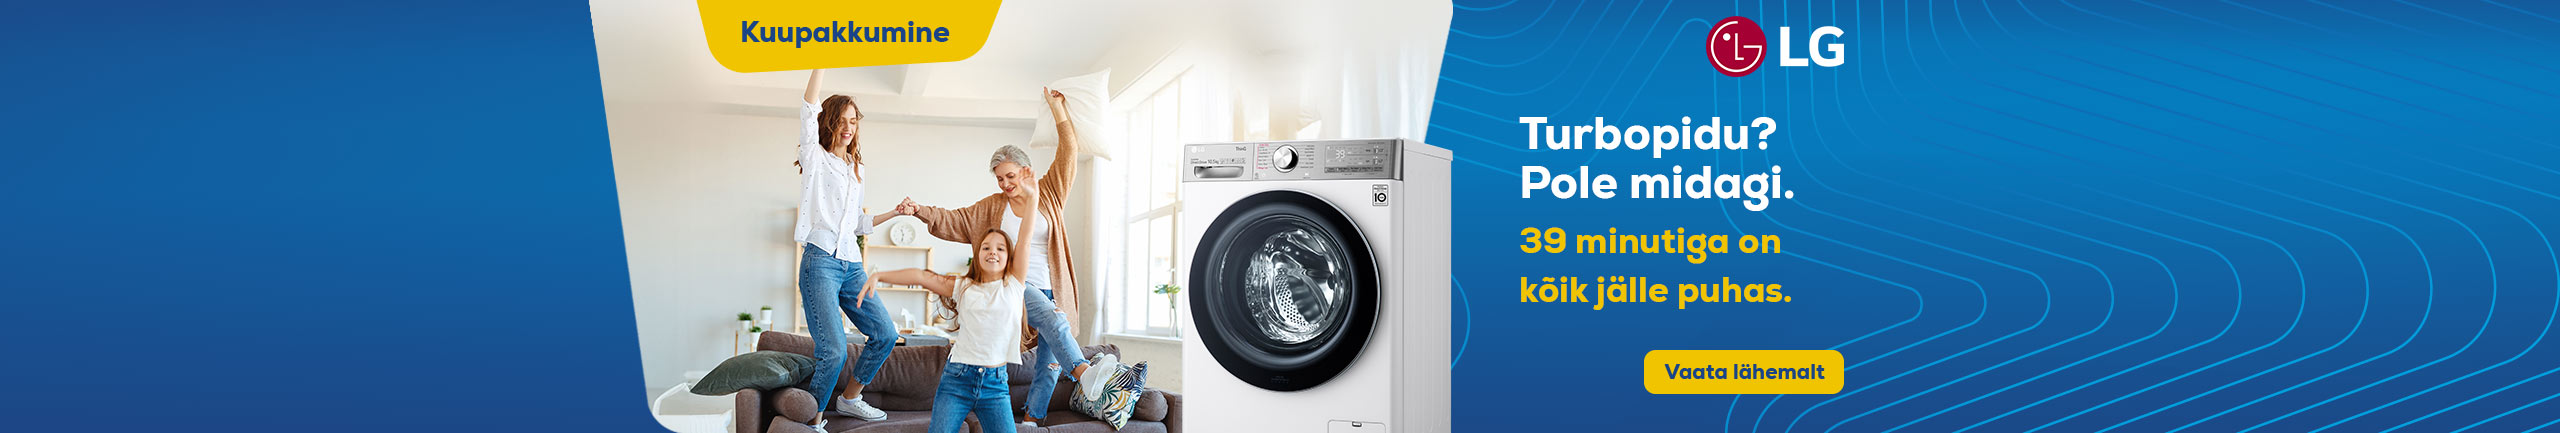 Discover LG washing machines